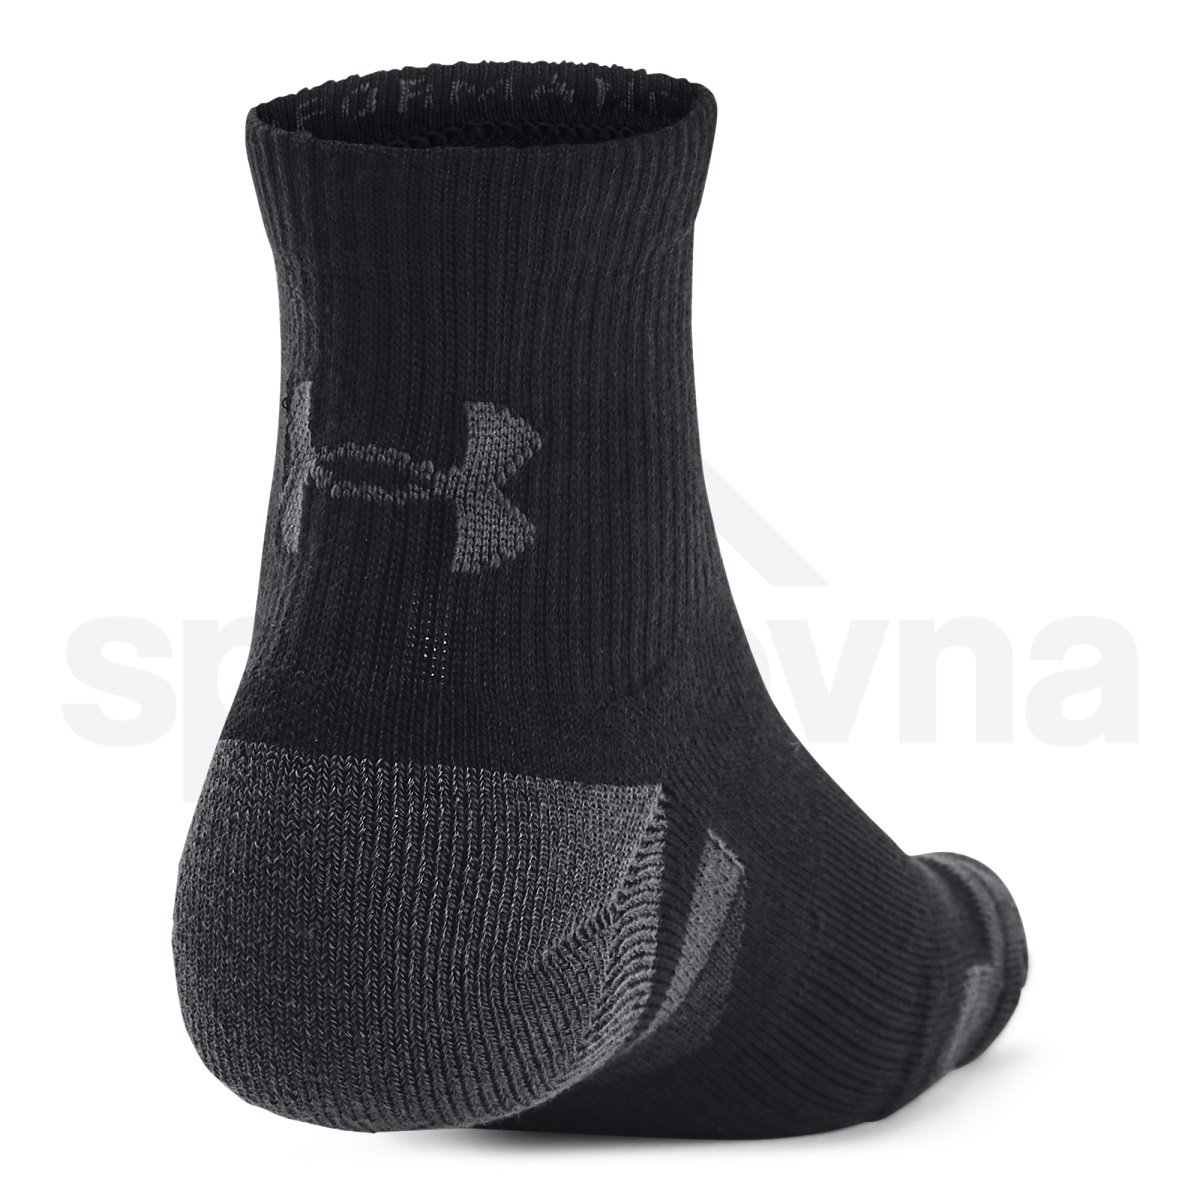 Ponožky Under Armour Performance Tech 3pk Qtr - černá